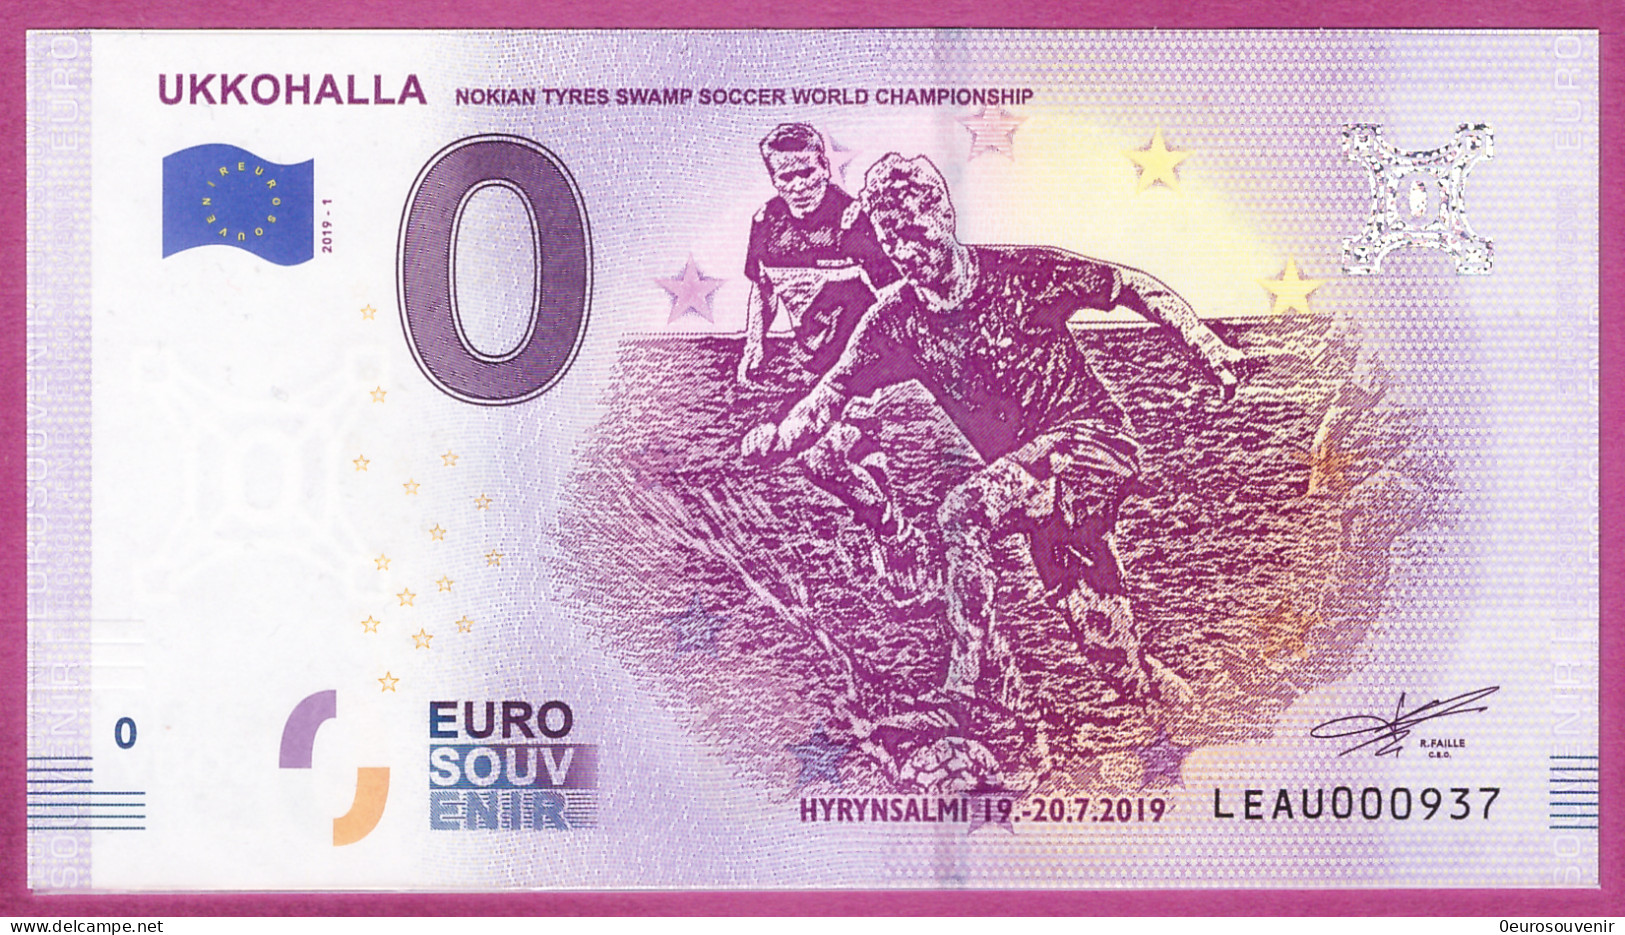 0-Euro LEAU 2019-1 UKKOHALLA - NOKIAN TYRES SWAMP SOCCER WORD CHAMPIONSHIP - Privatentwürfe